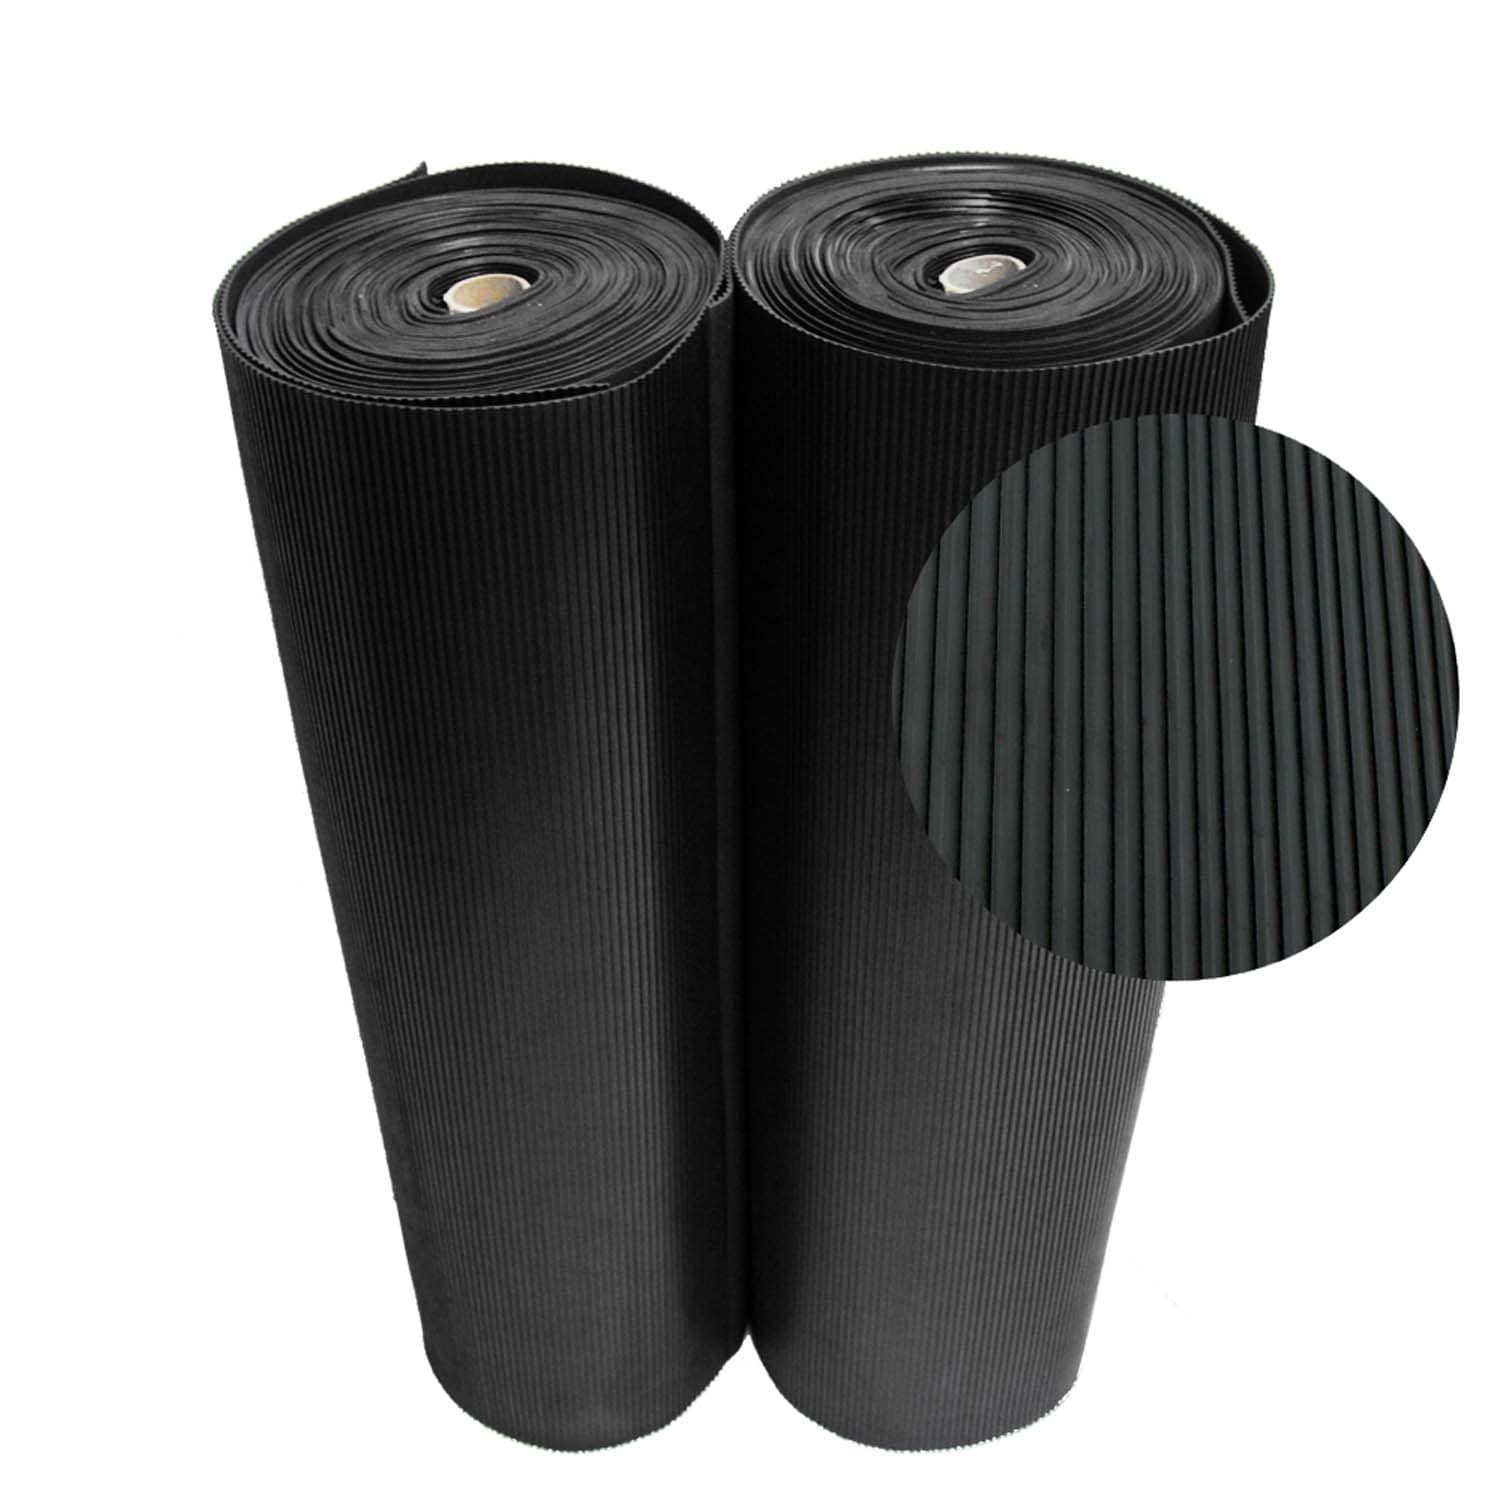 Rubber-Cal Diamond-Plate Rubber Flooring Rolls - 3 mm x 4 ft x 4 ft Rolls - Black